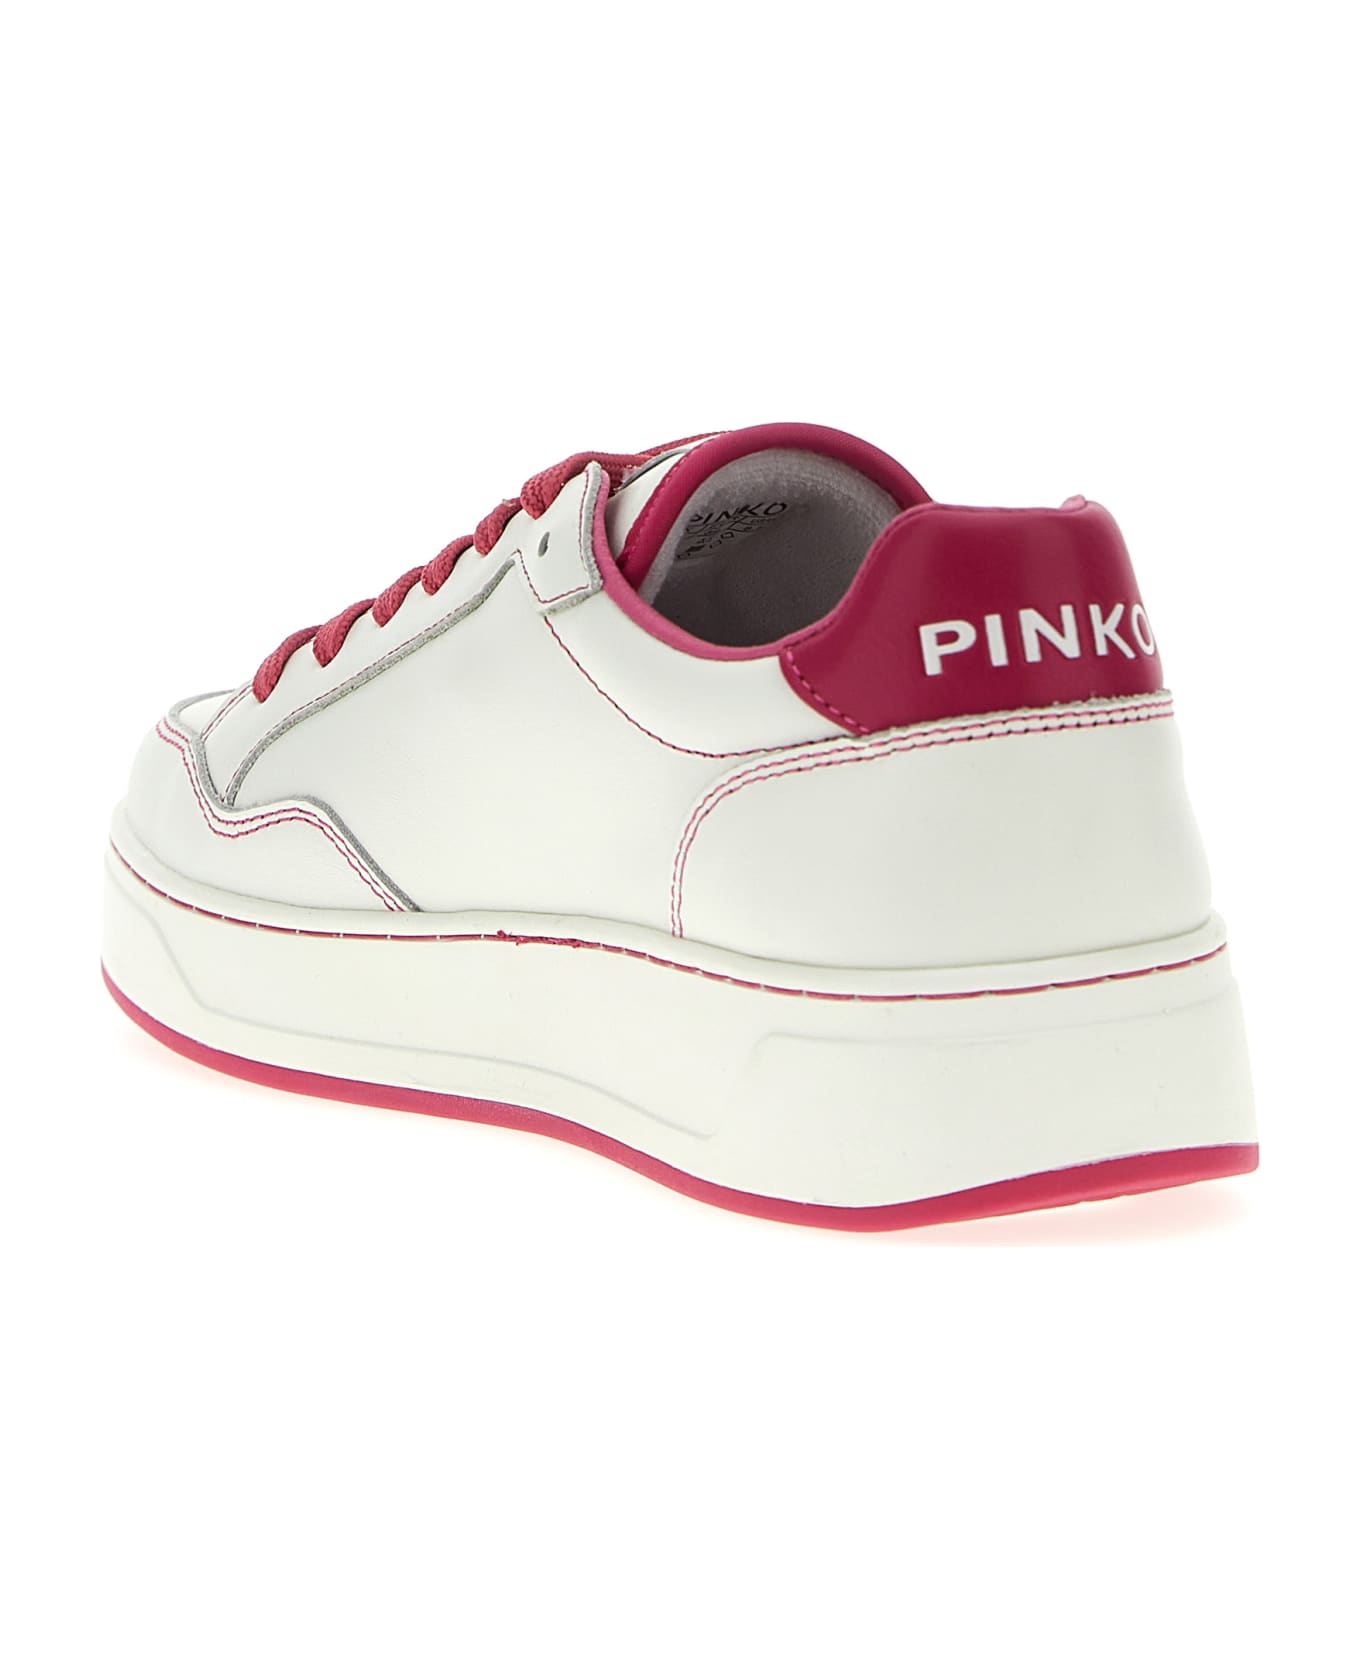 Pinko Bondy 2.0 Sneakers - Fuchsia スニーカー